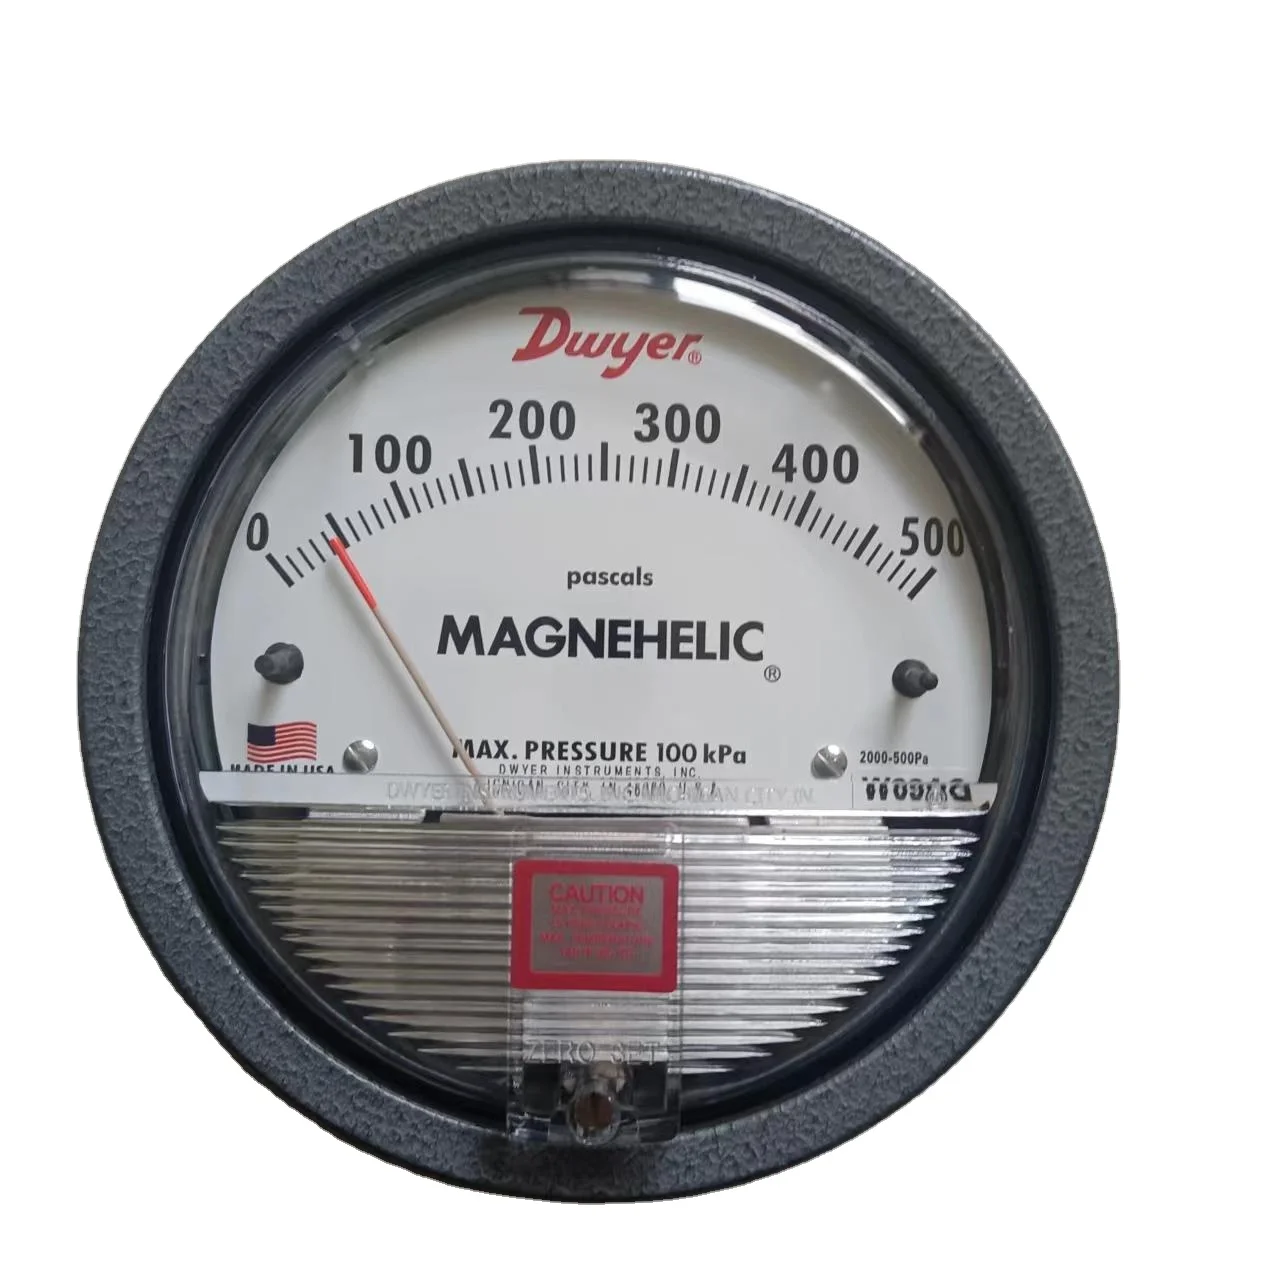 Magnehelic gauge kit